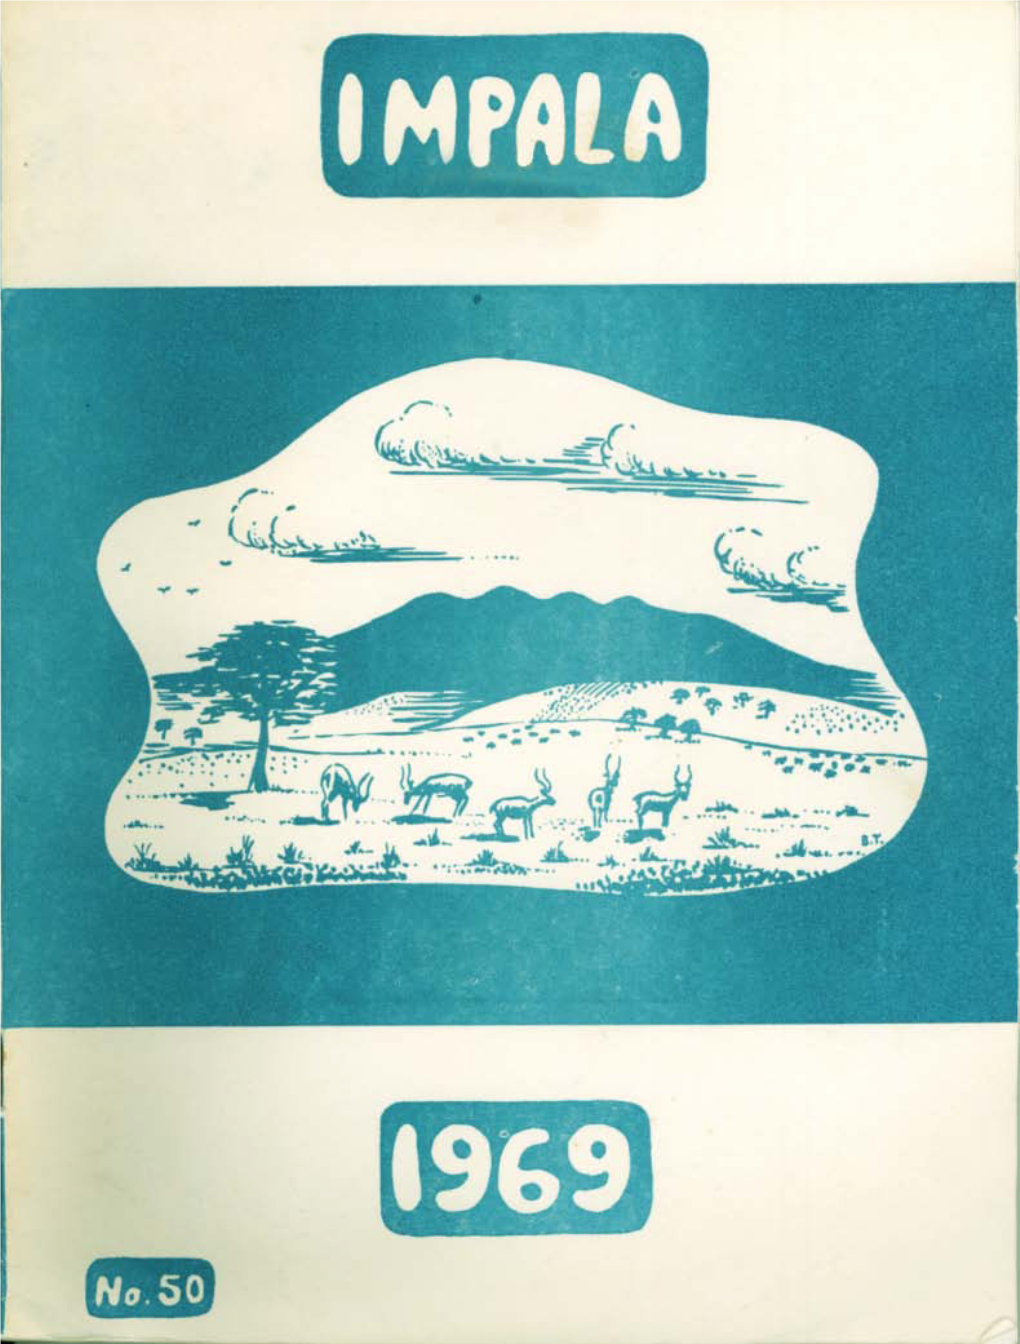 THE IMPALA 1969 the Magazine of Nairobi School